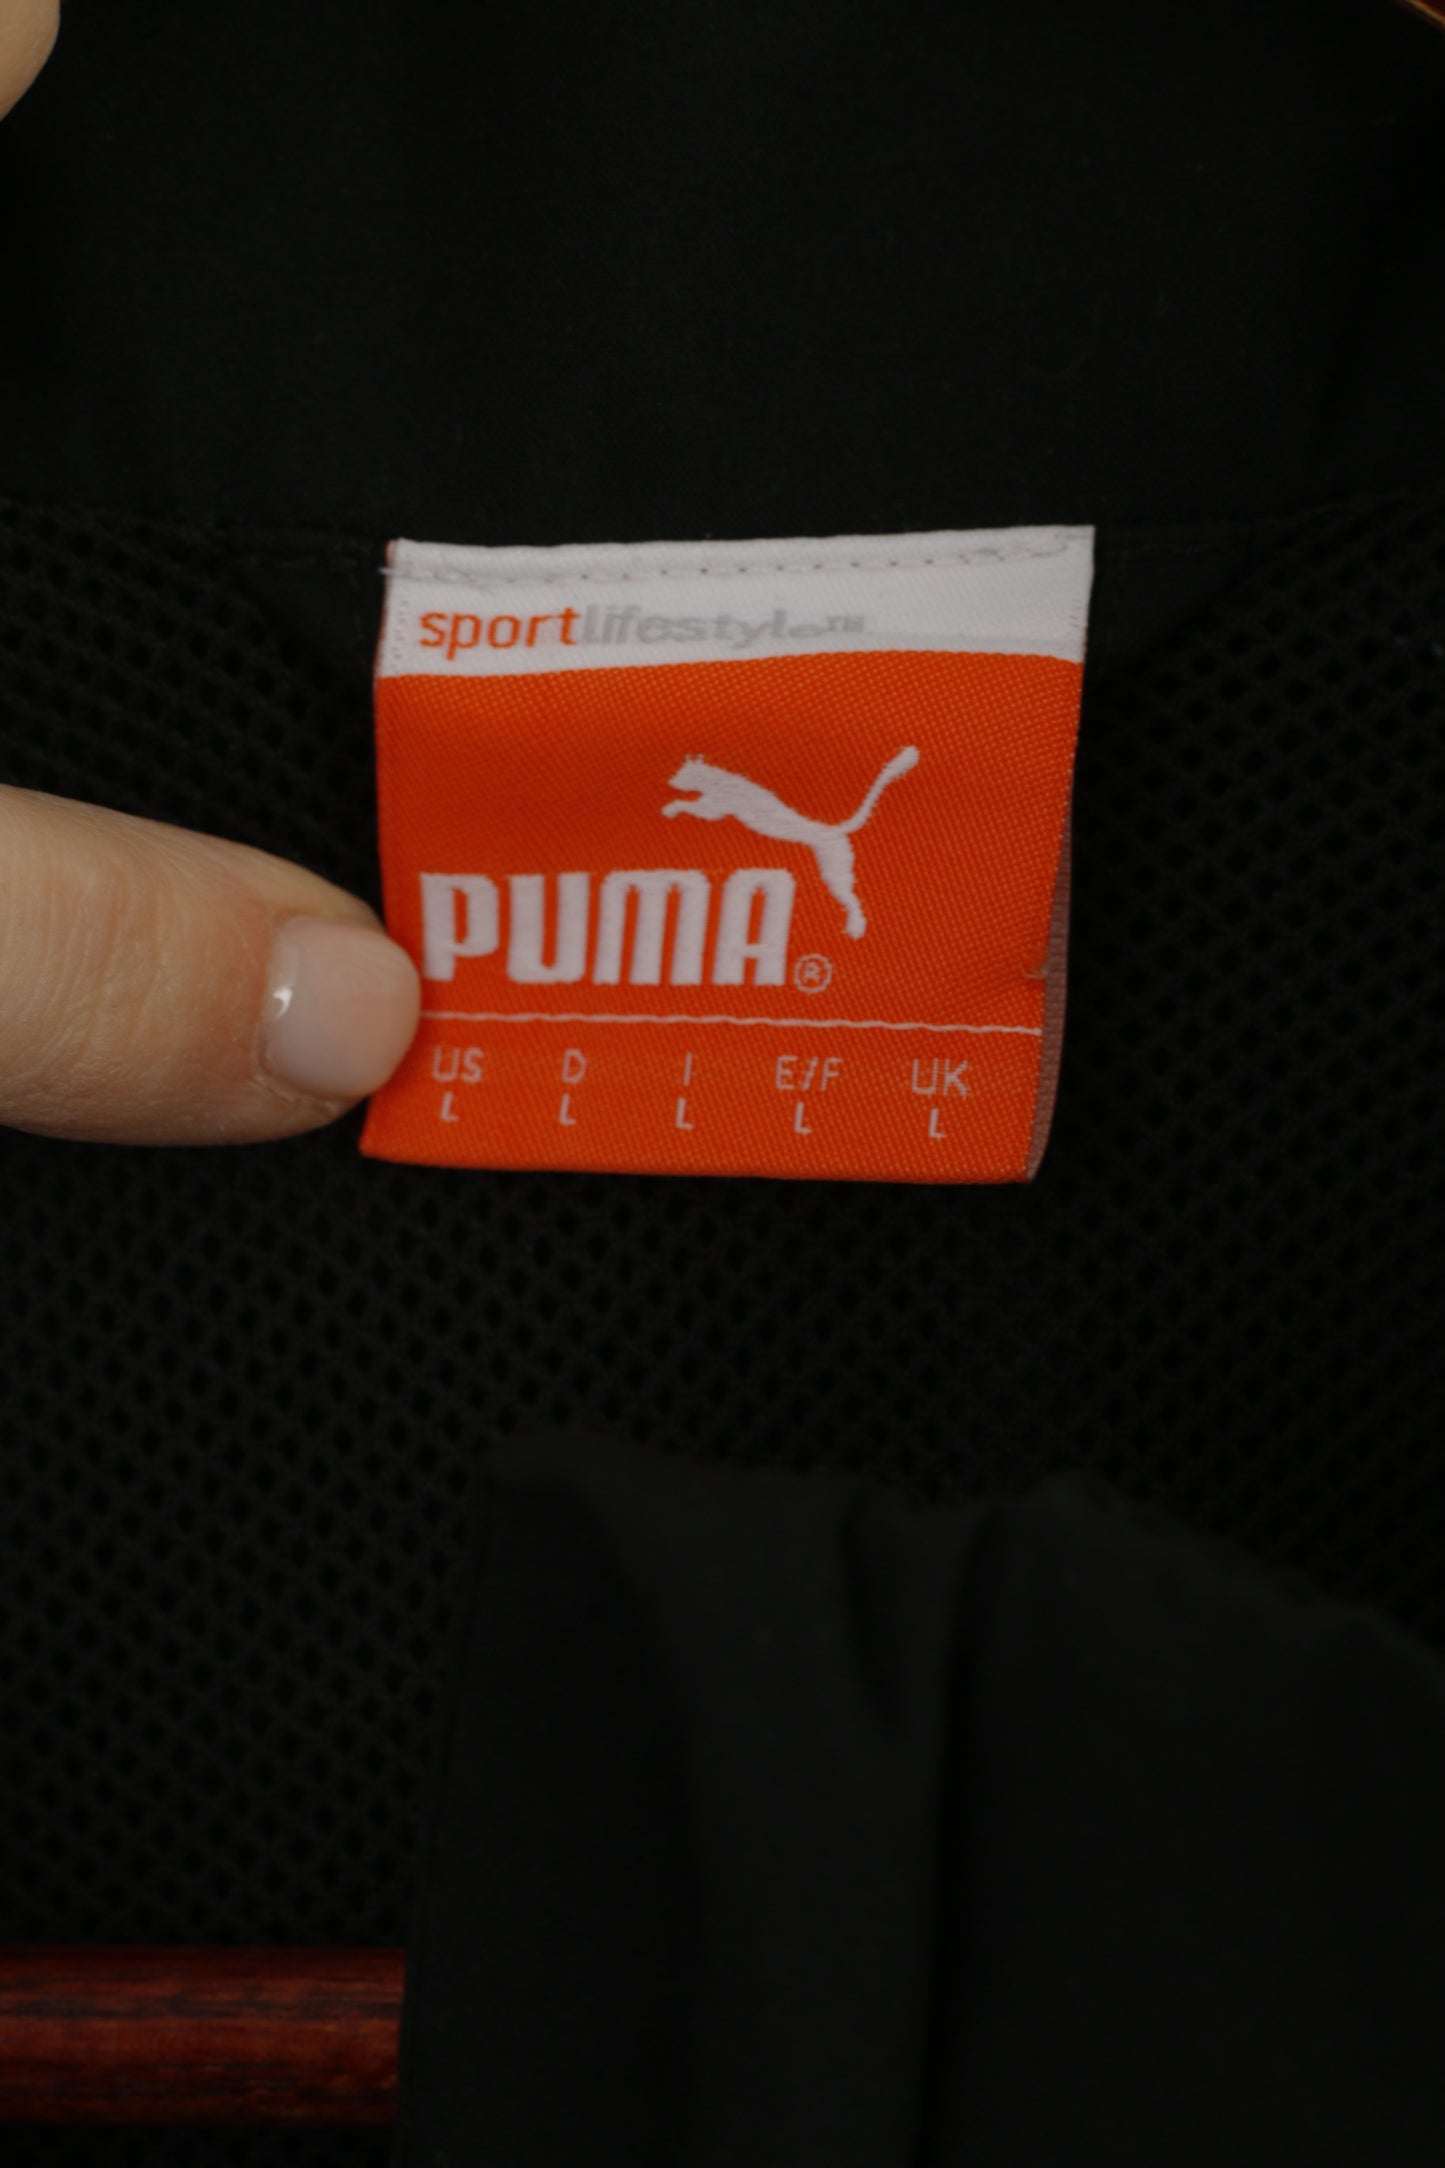 Puma Men L Jacket Black White Activewear Full Zipper Sport Lifestyle Mesh Lined Top